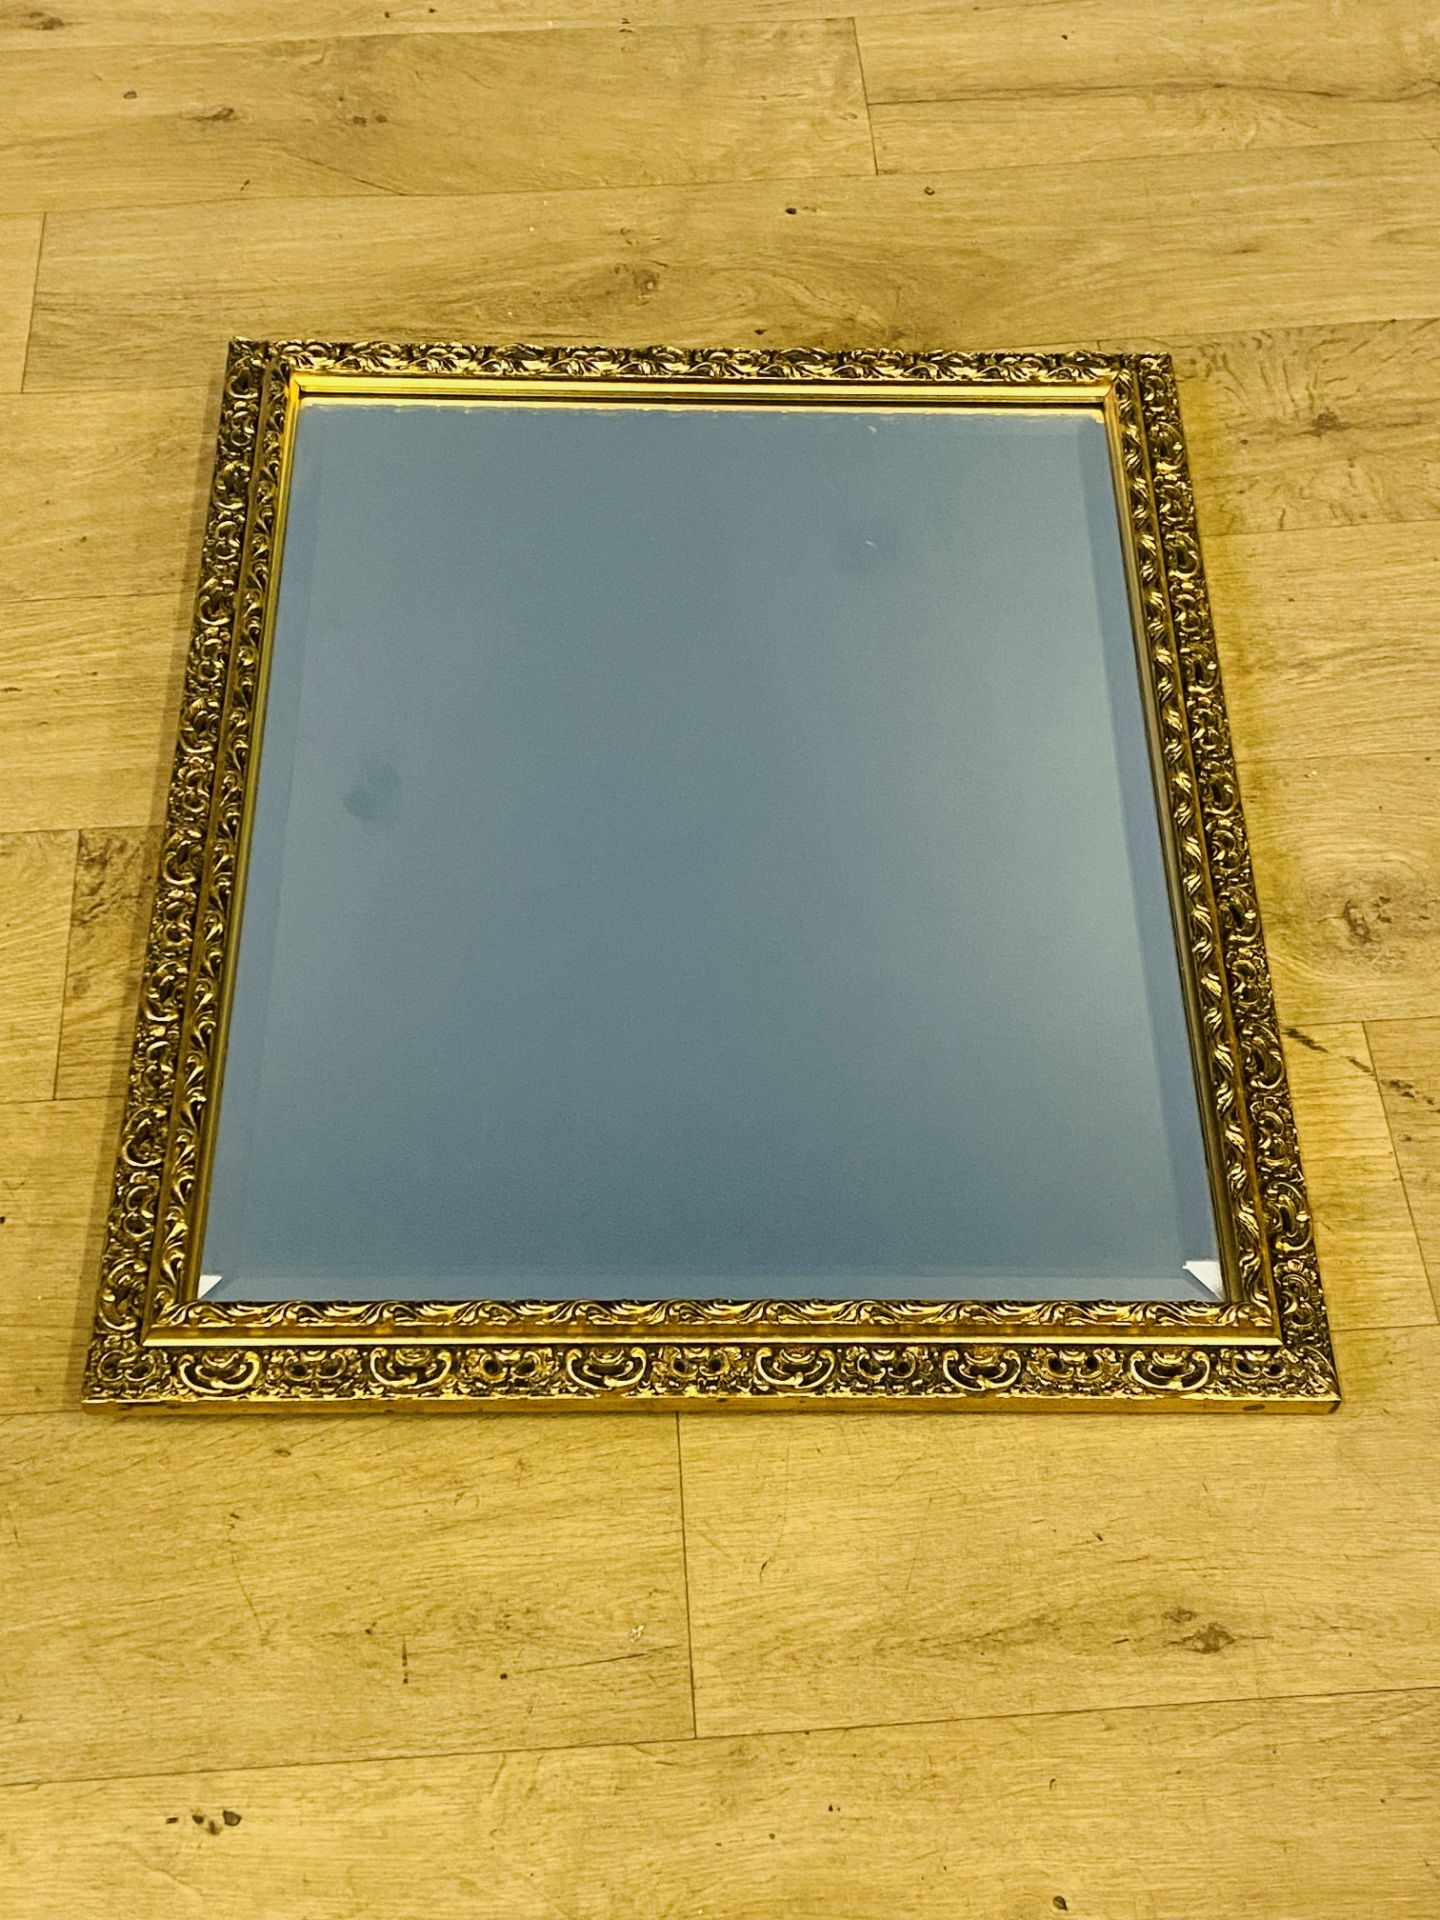 Gilt framed wall mirror - Image 2 of 4